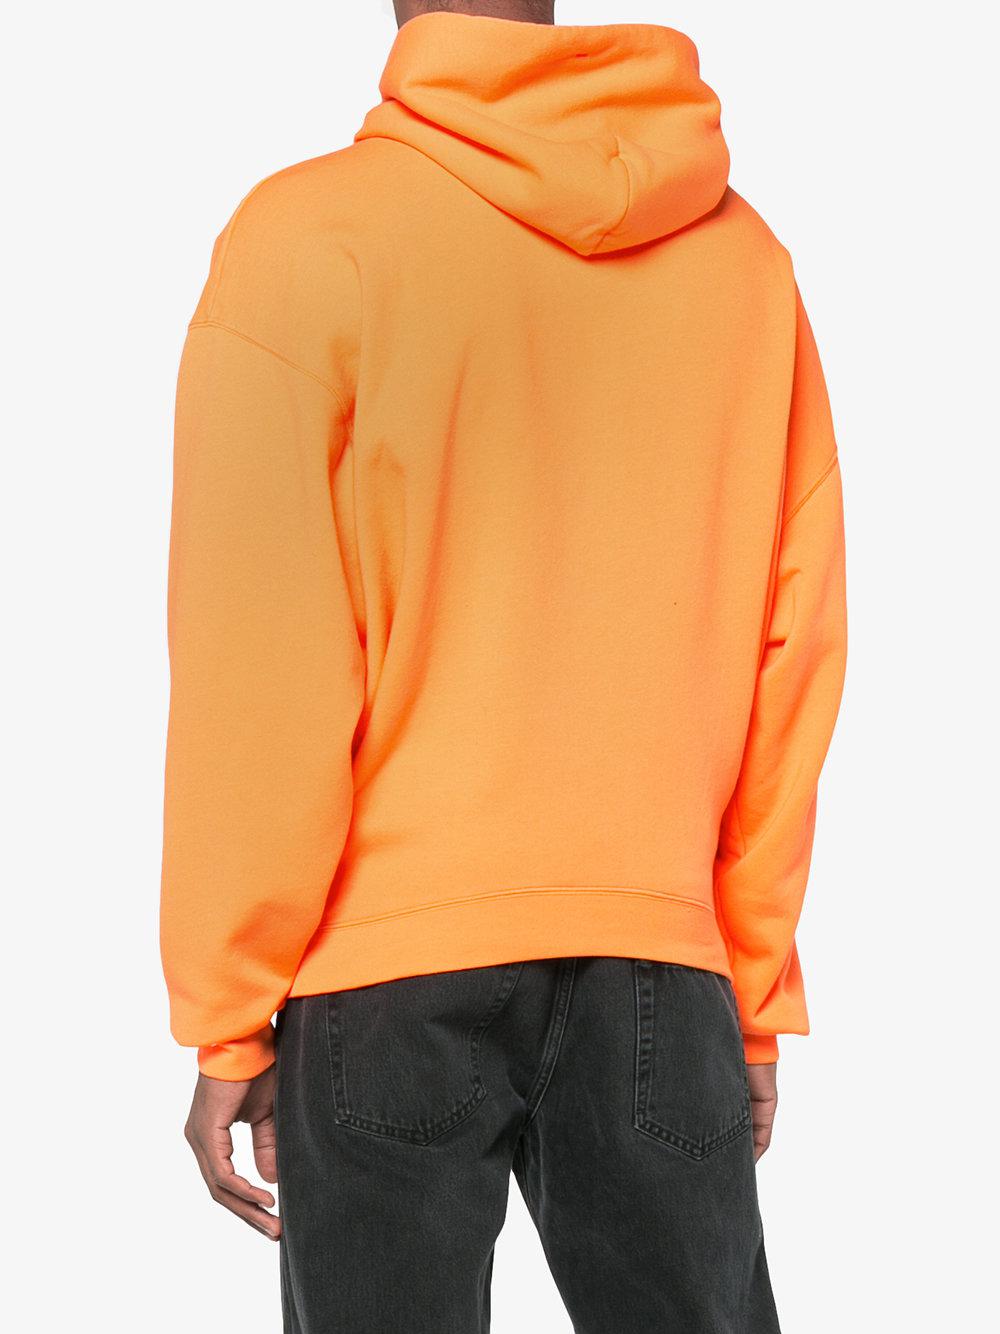 orange balenciaga hoodie